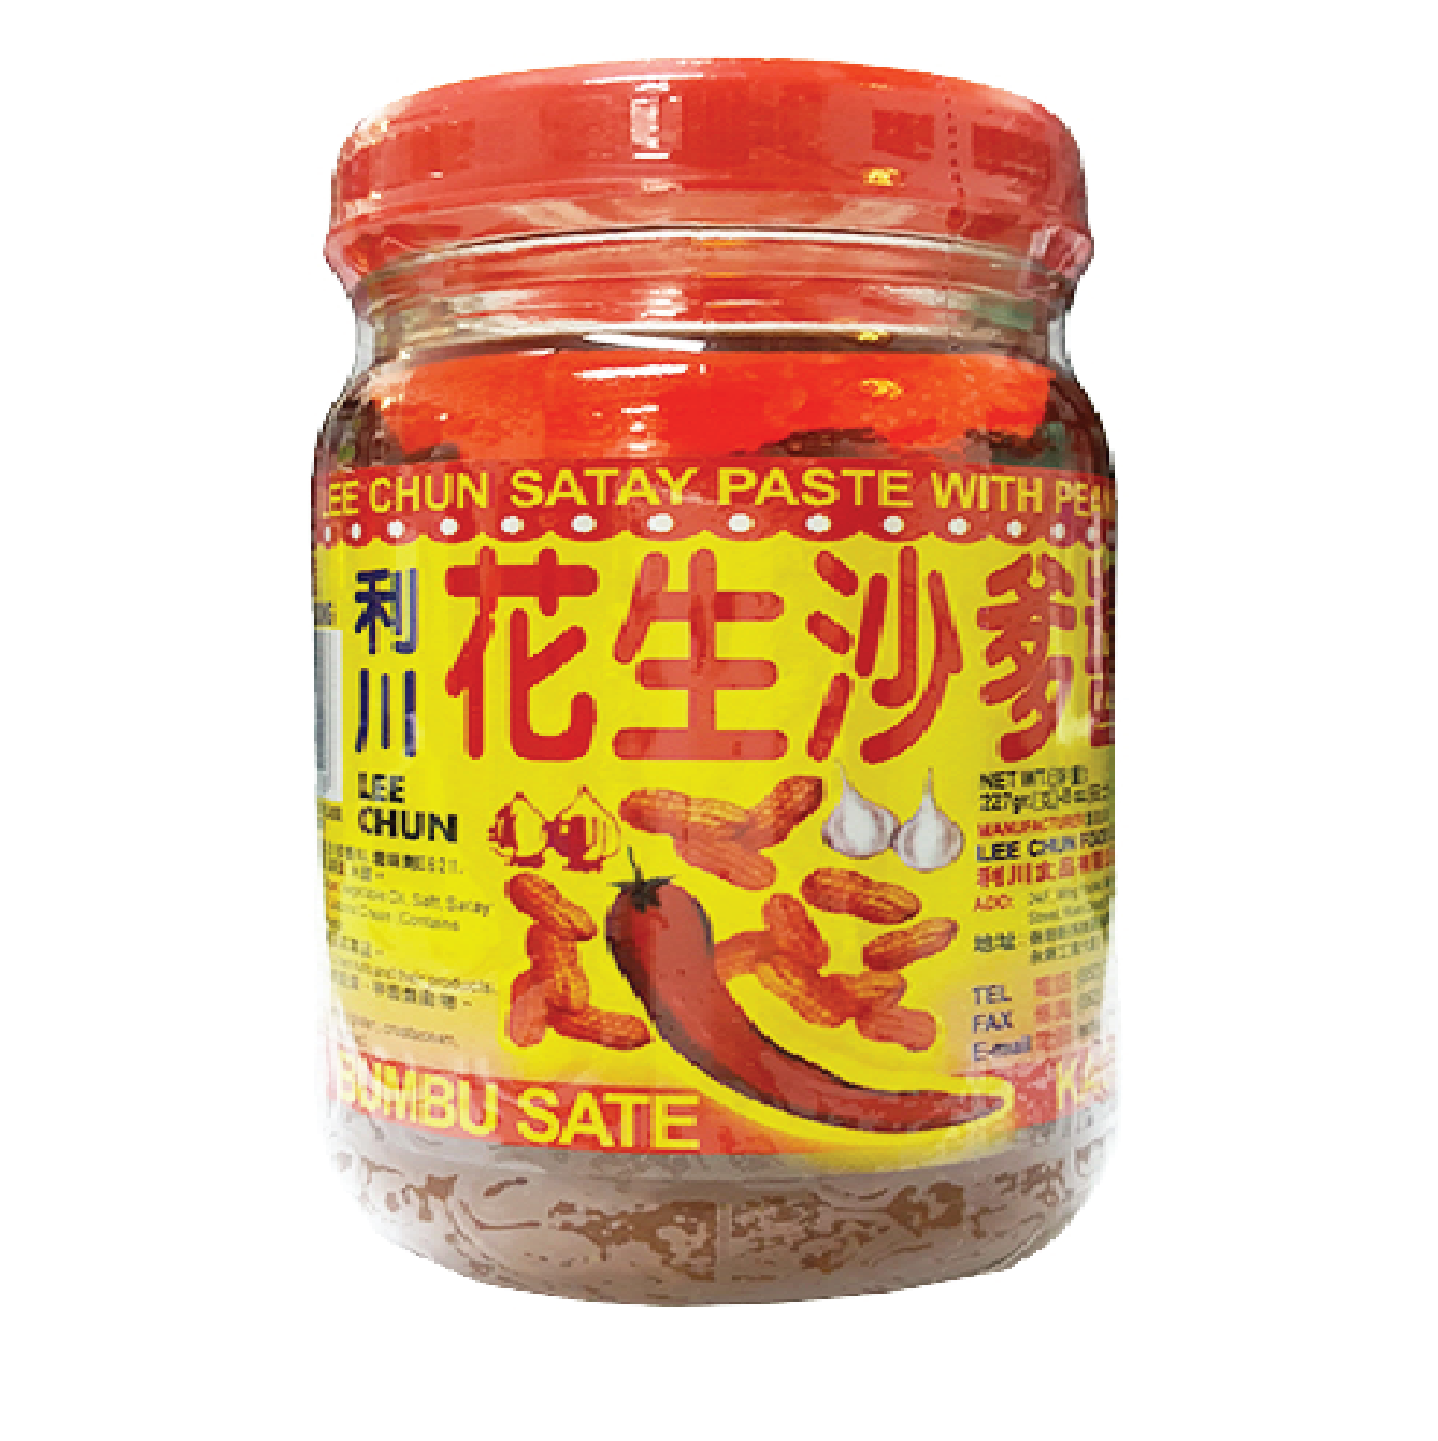 Lee Chun Satay Paste With Peanuts 227G 利川 花生沙爹醬 227G